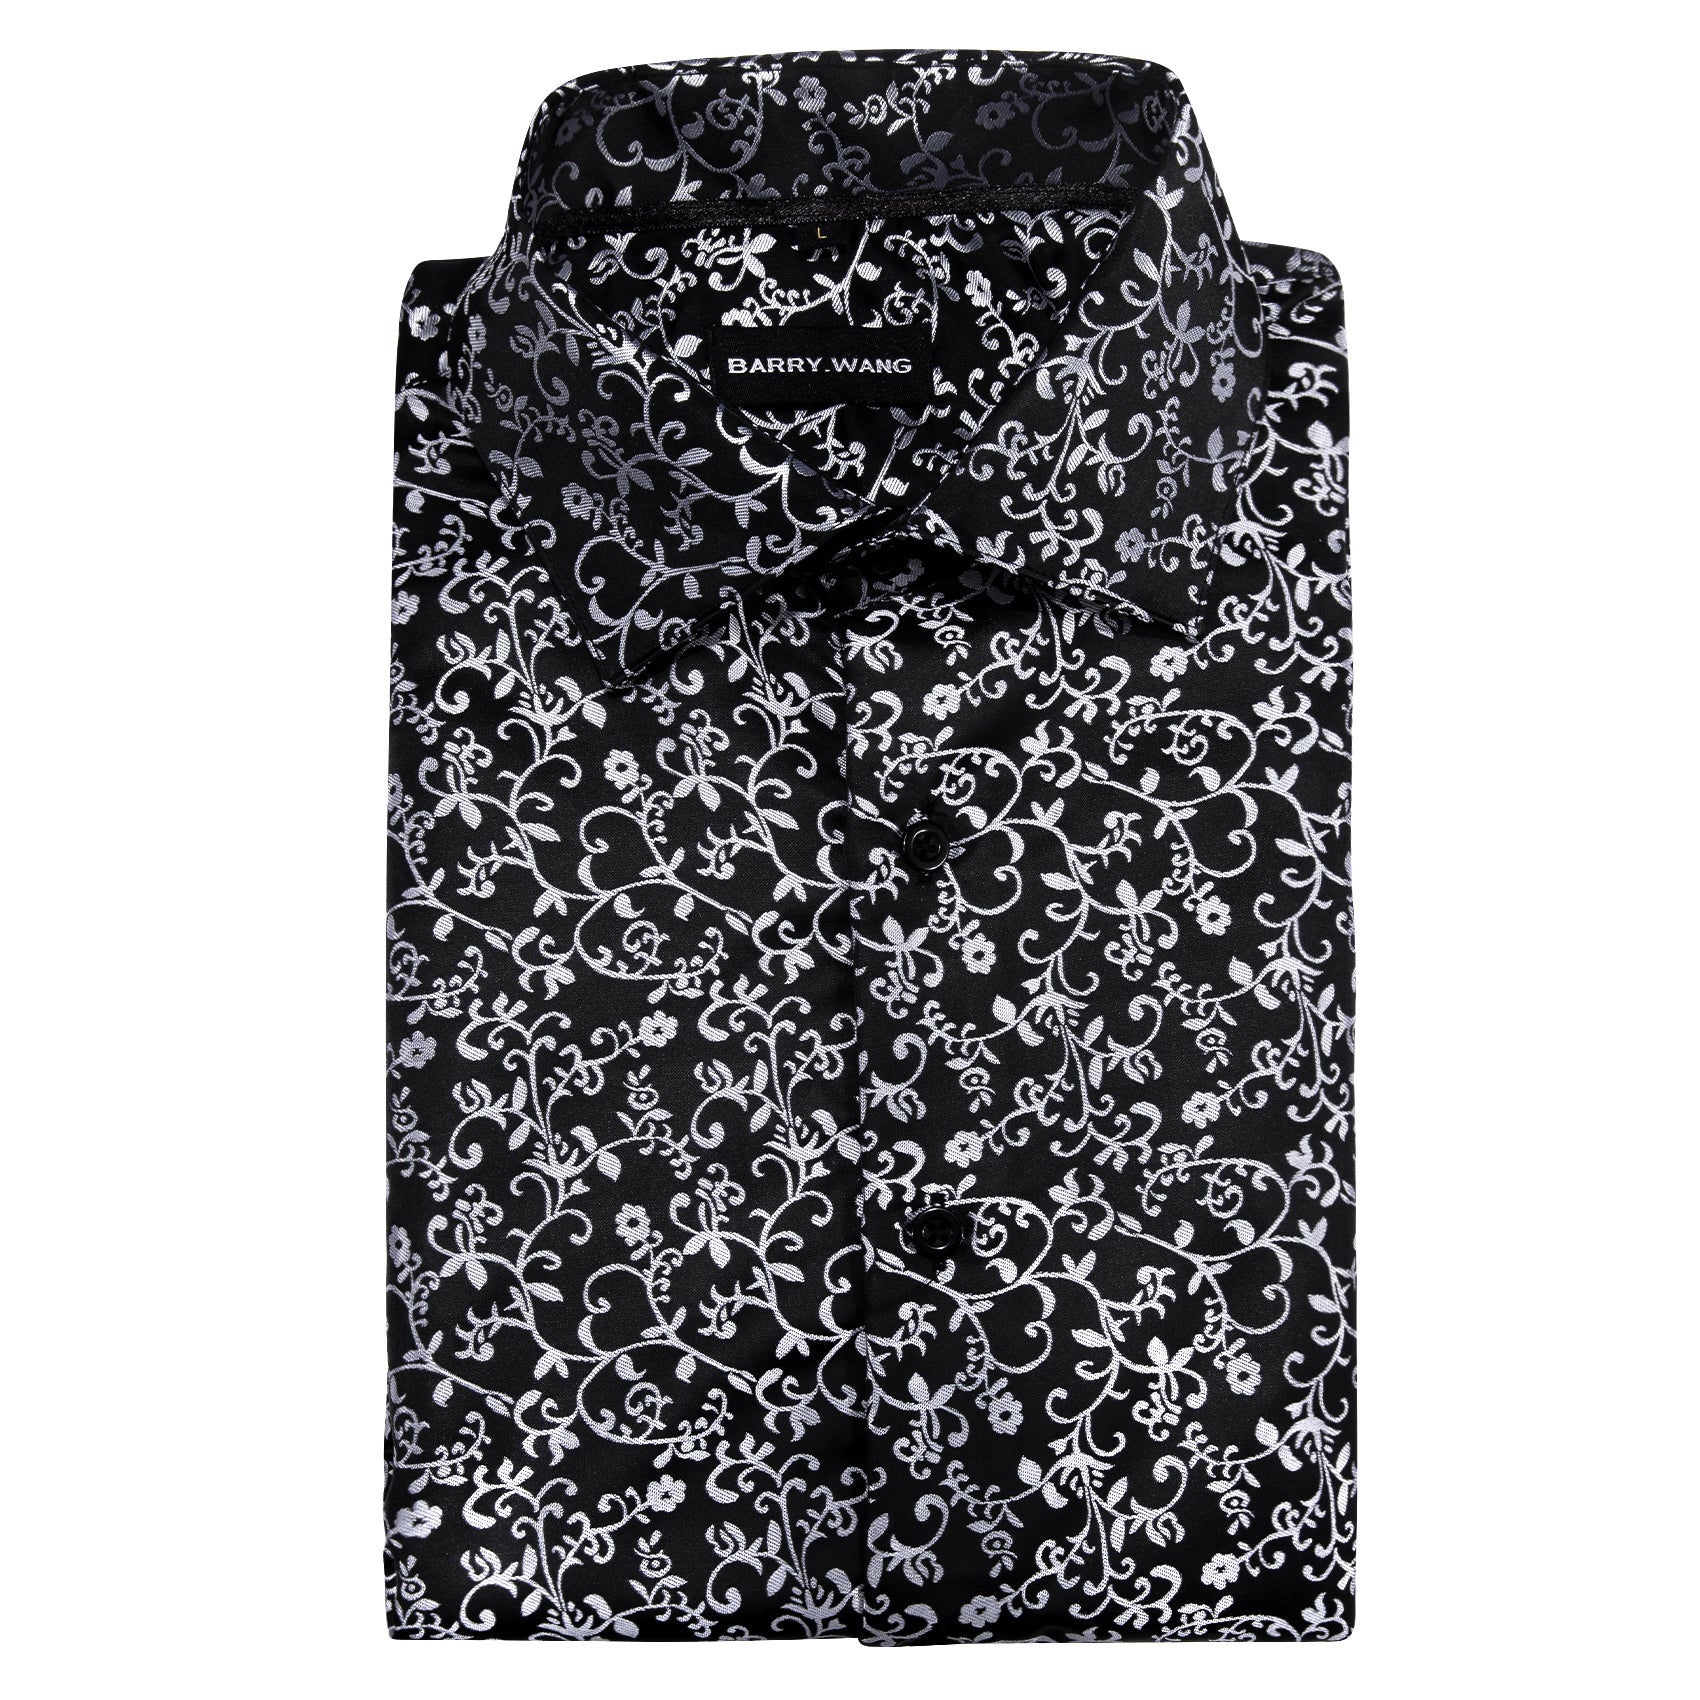 Barry.wang Button Down Shirt Black White Floral Silk Long Sleeve Shirt